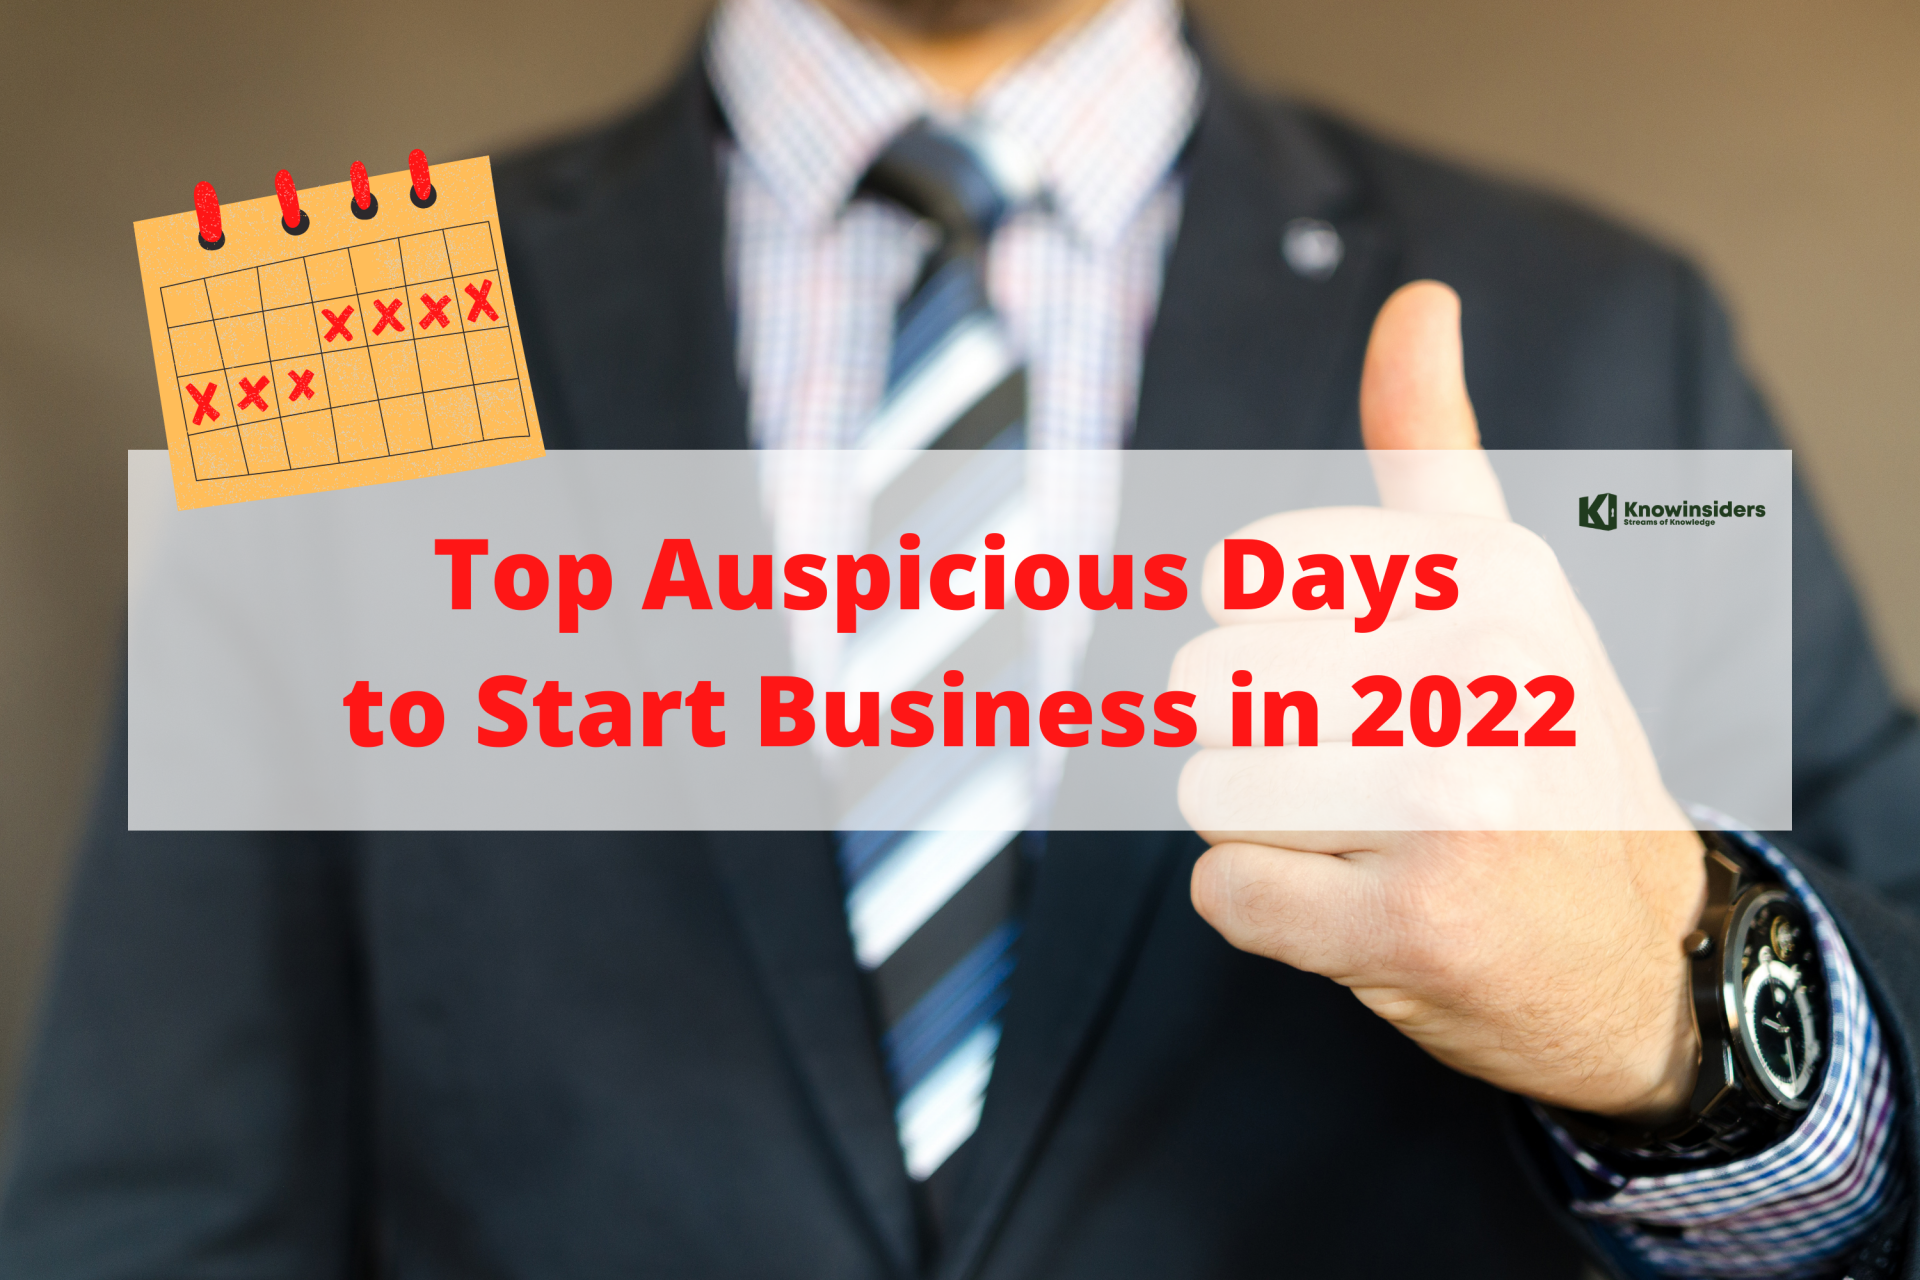 Top Auspicious Days to Start Business in 2022